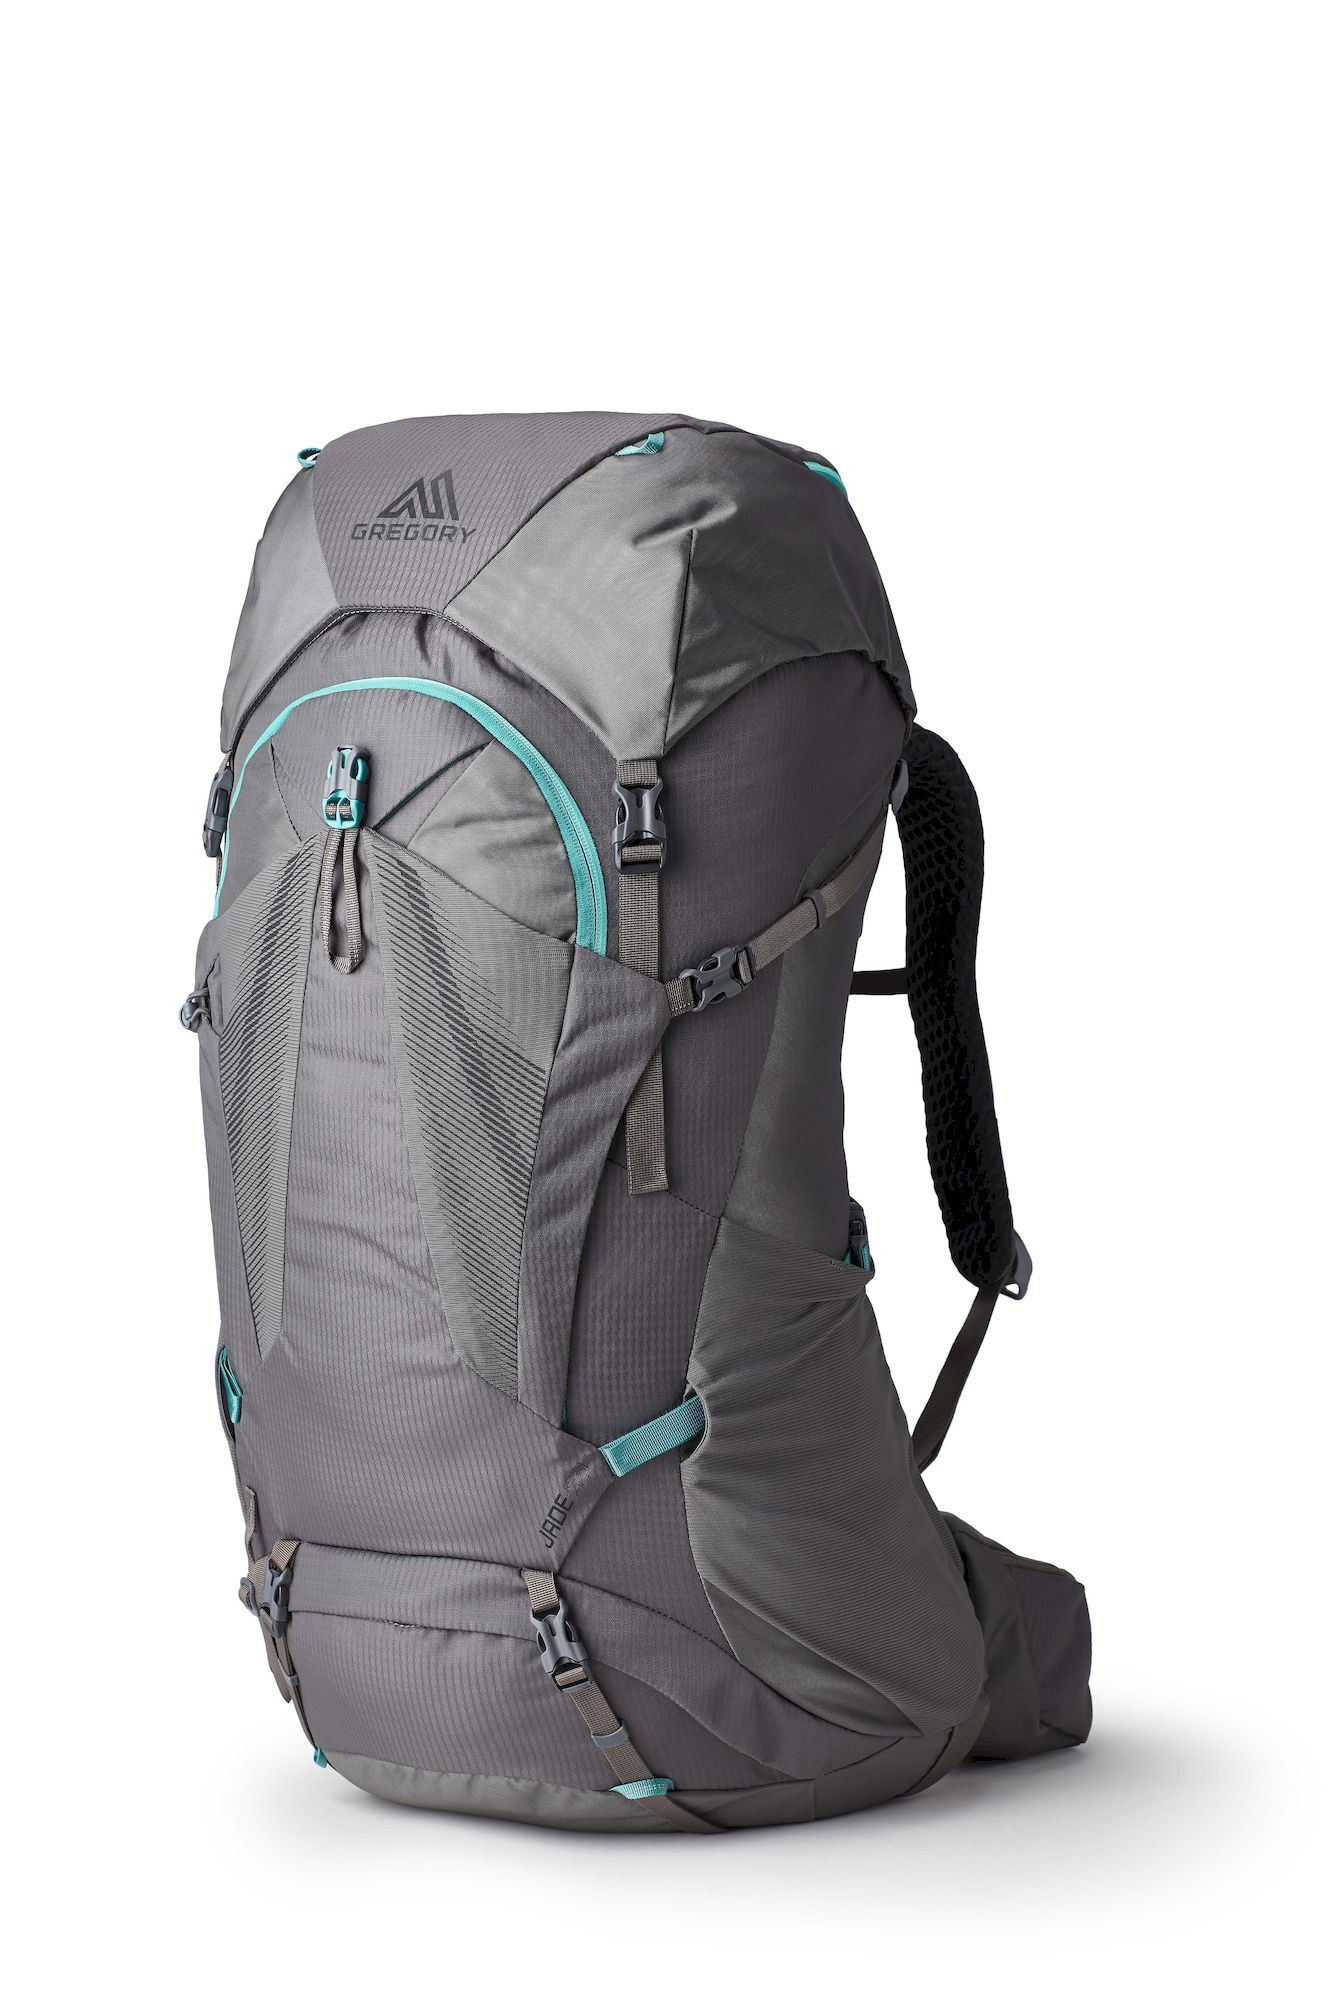 Gregory Jade 53 - Hiking backpack - Women's